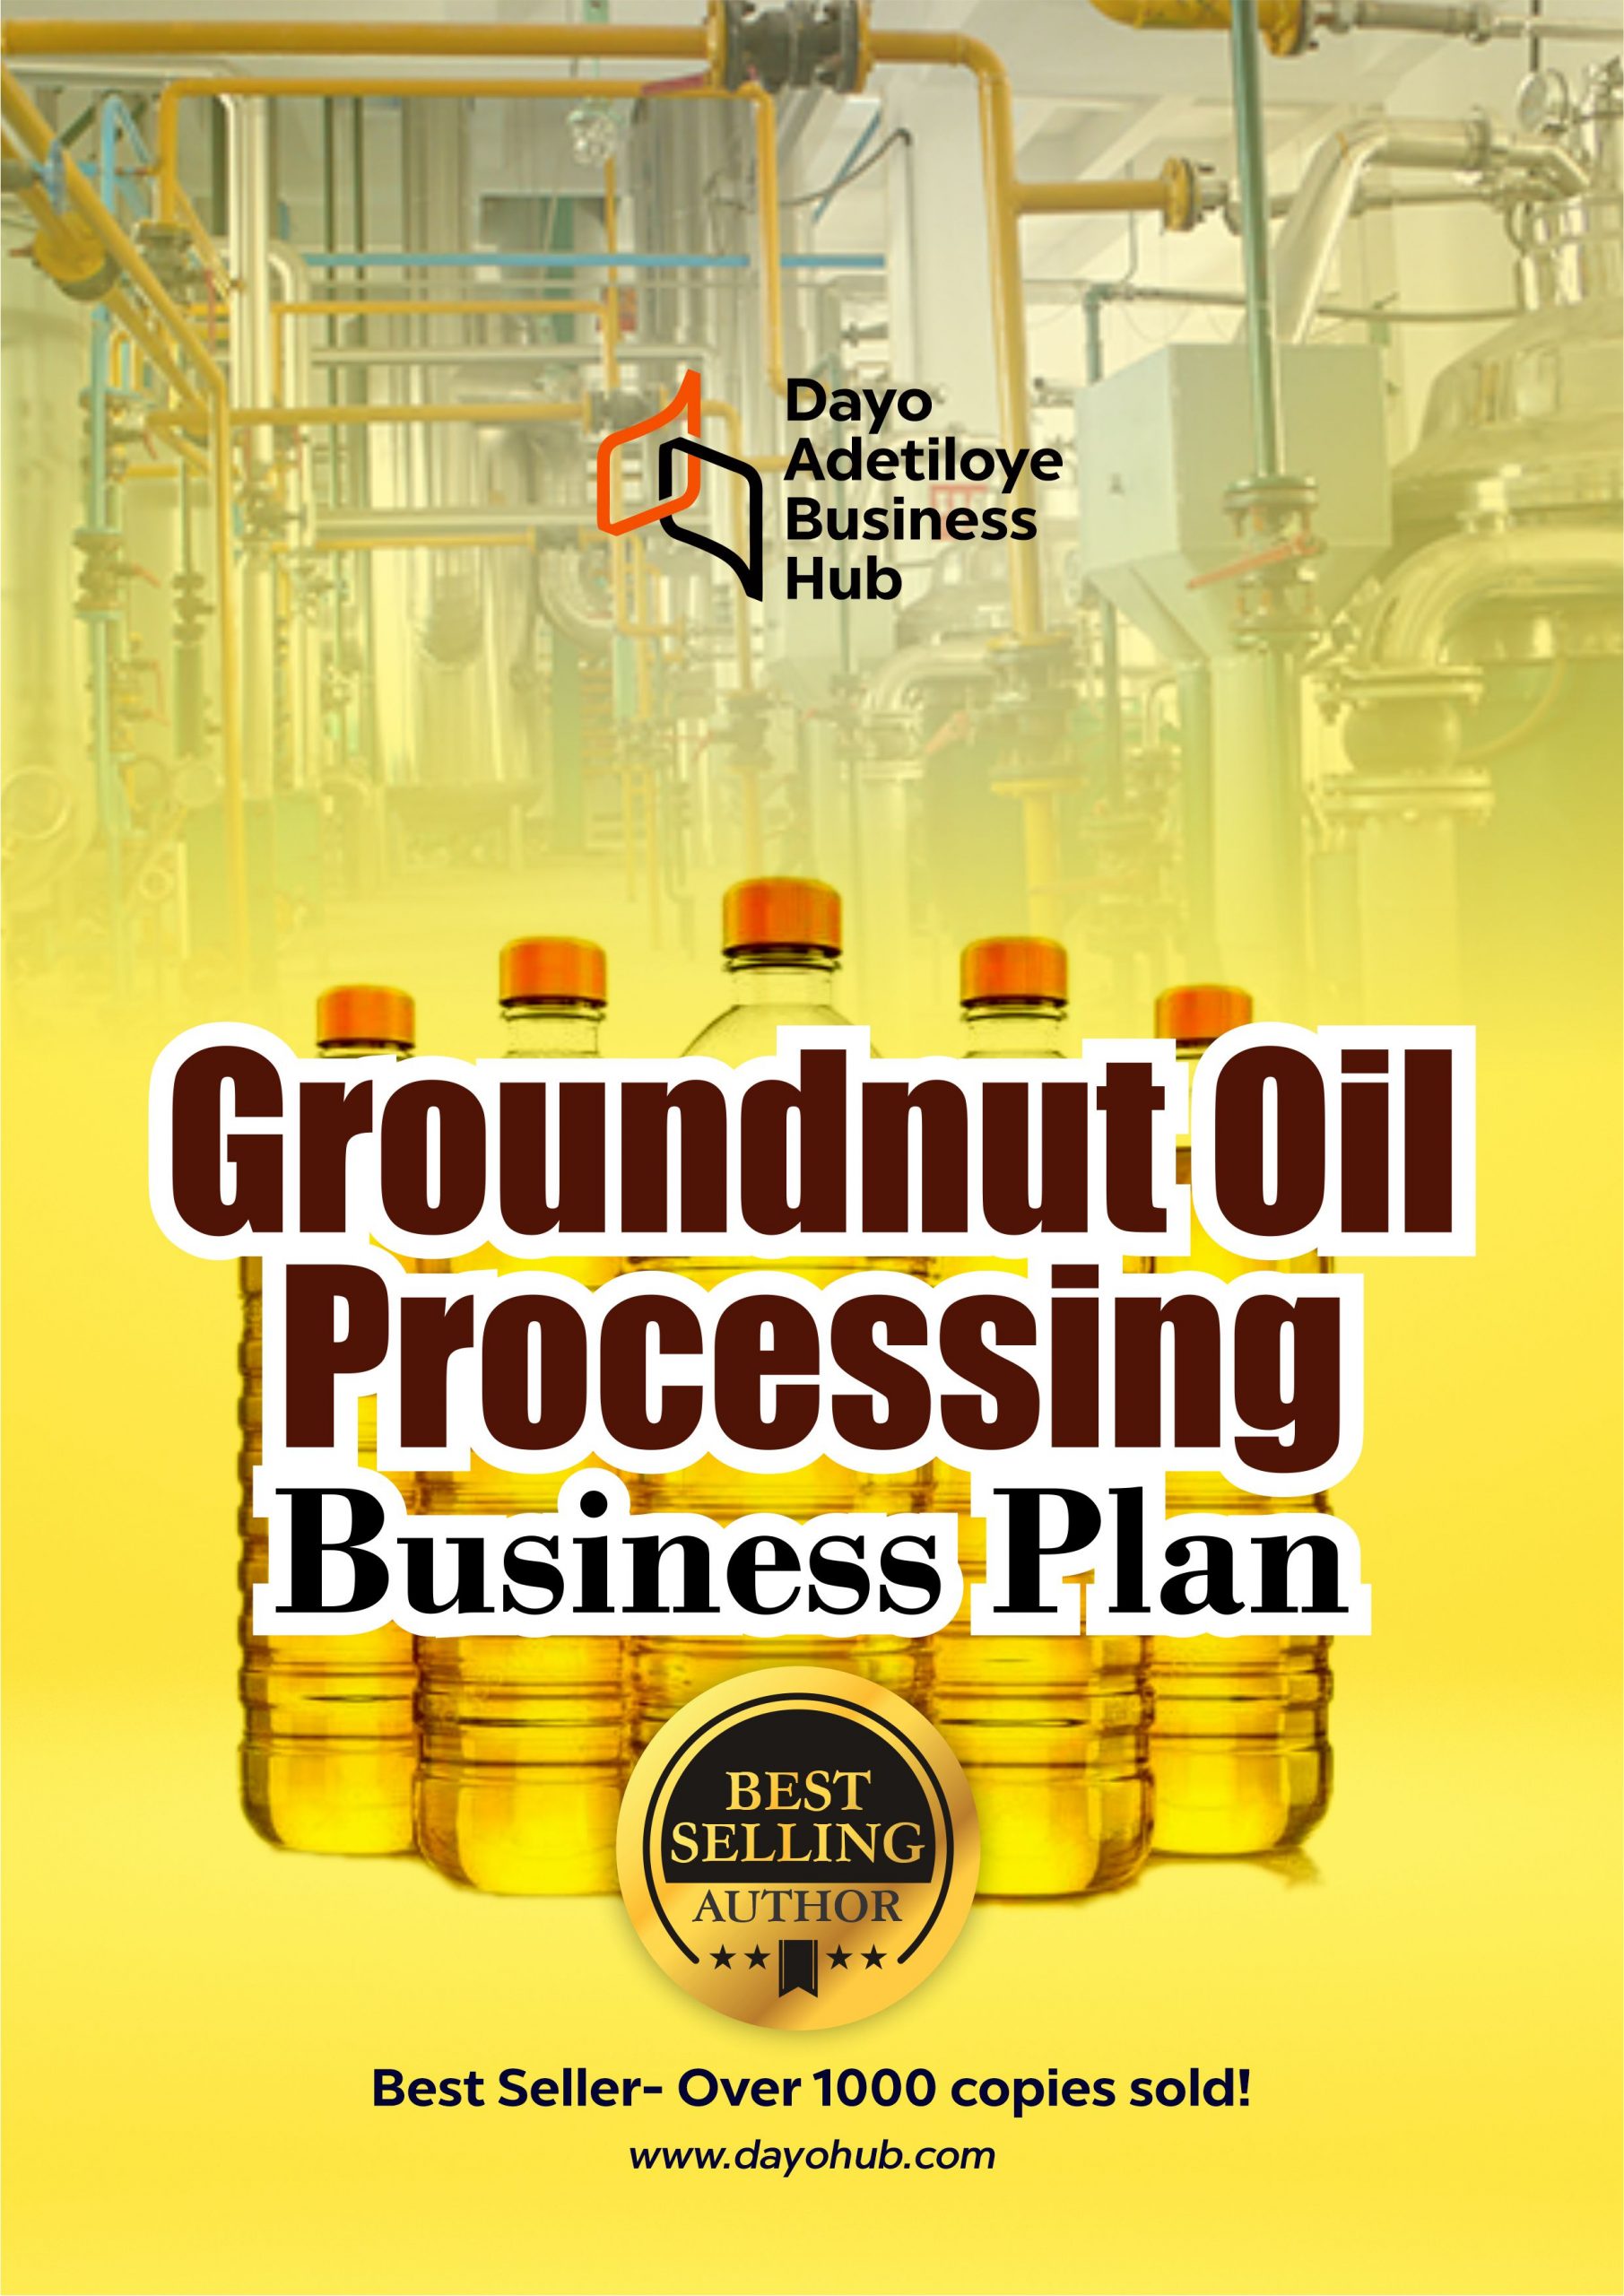 groundnut oil mill business plan